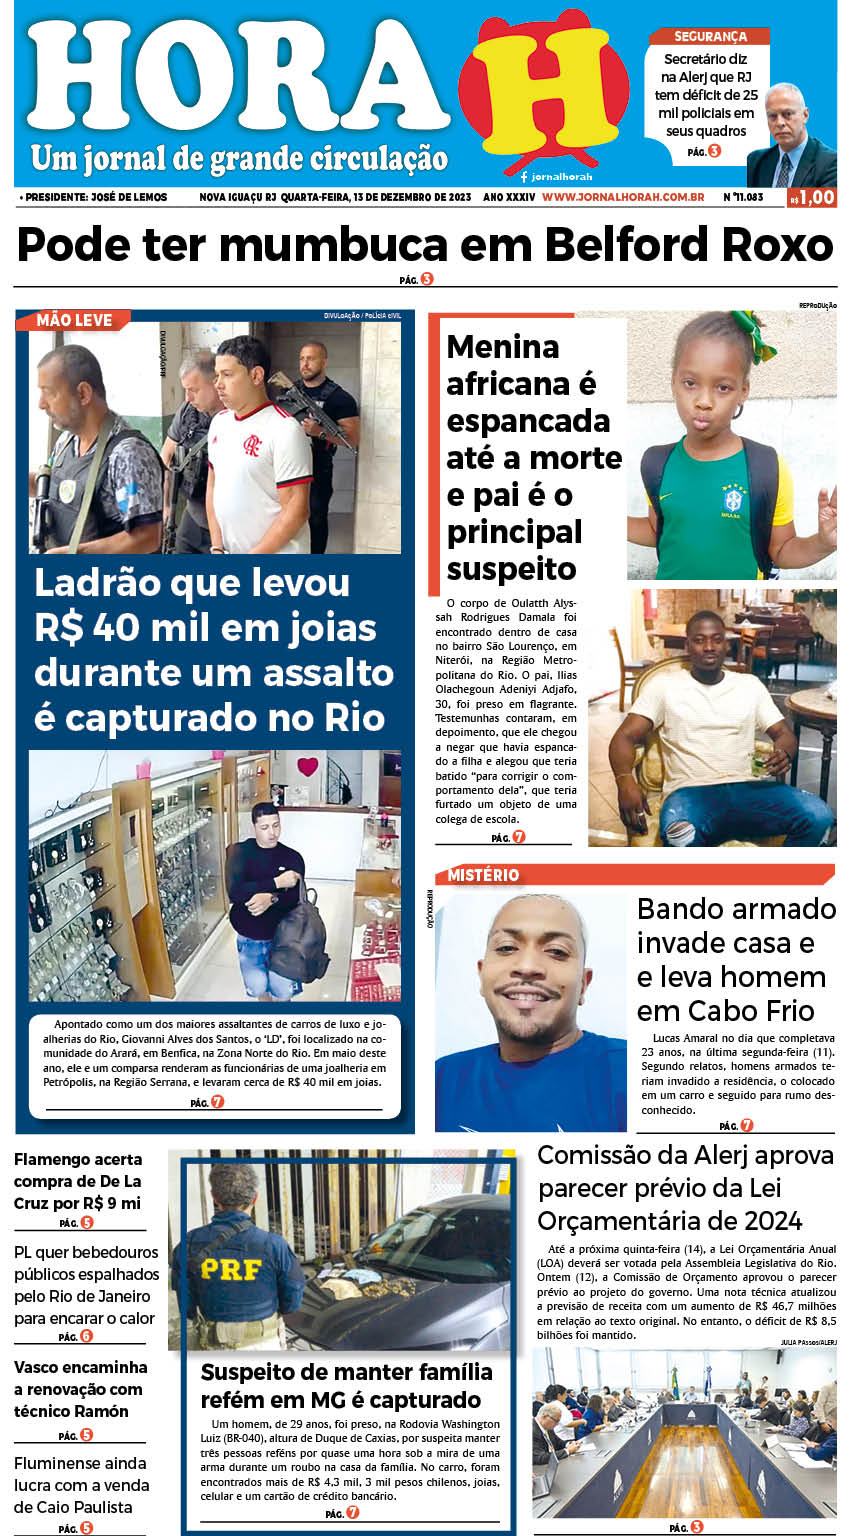 IFRJ Archives - Jornal hora H